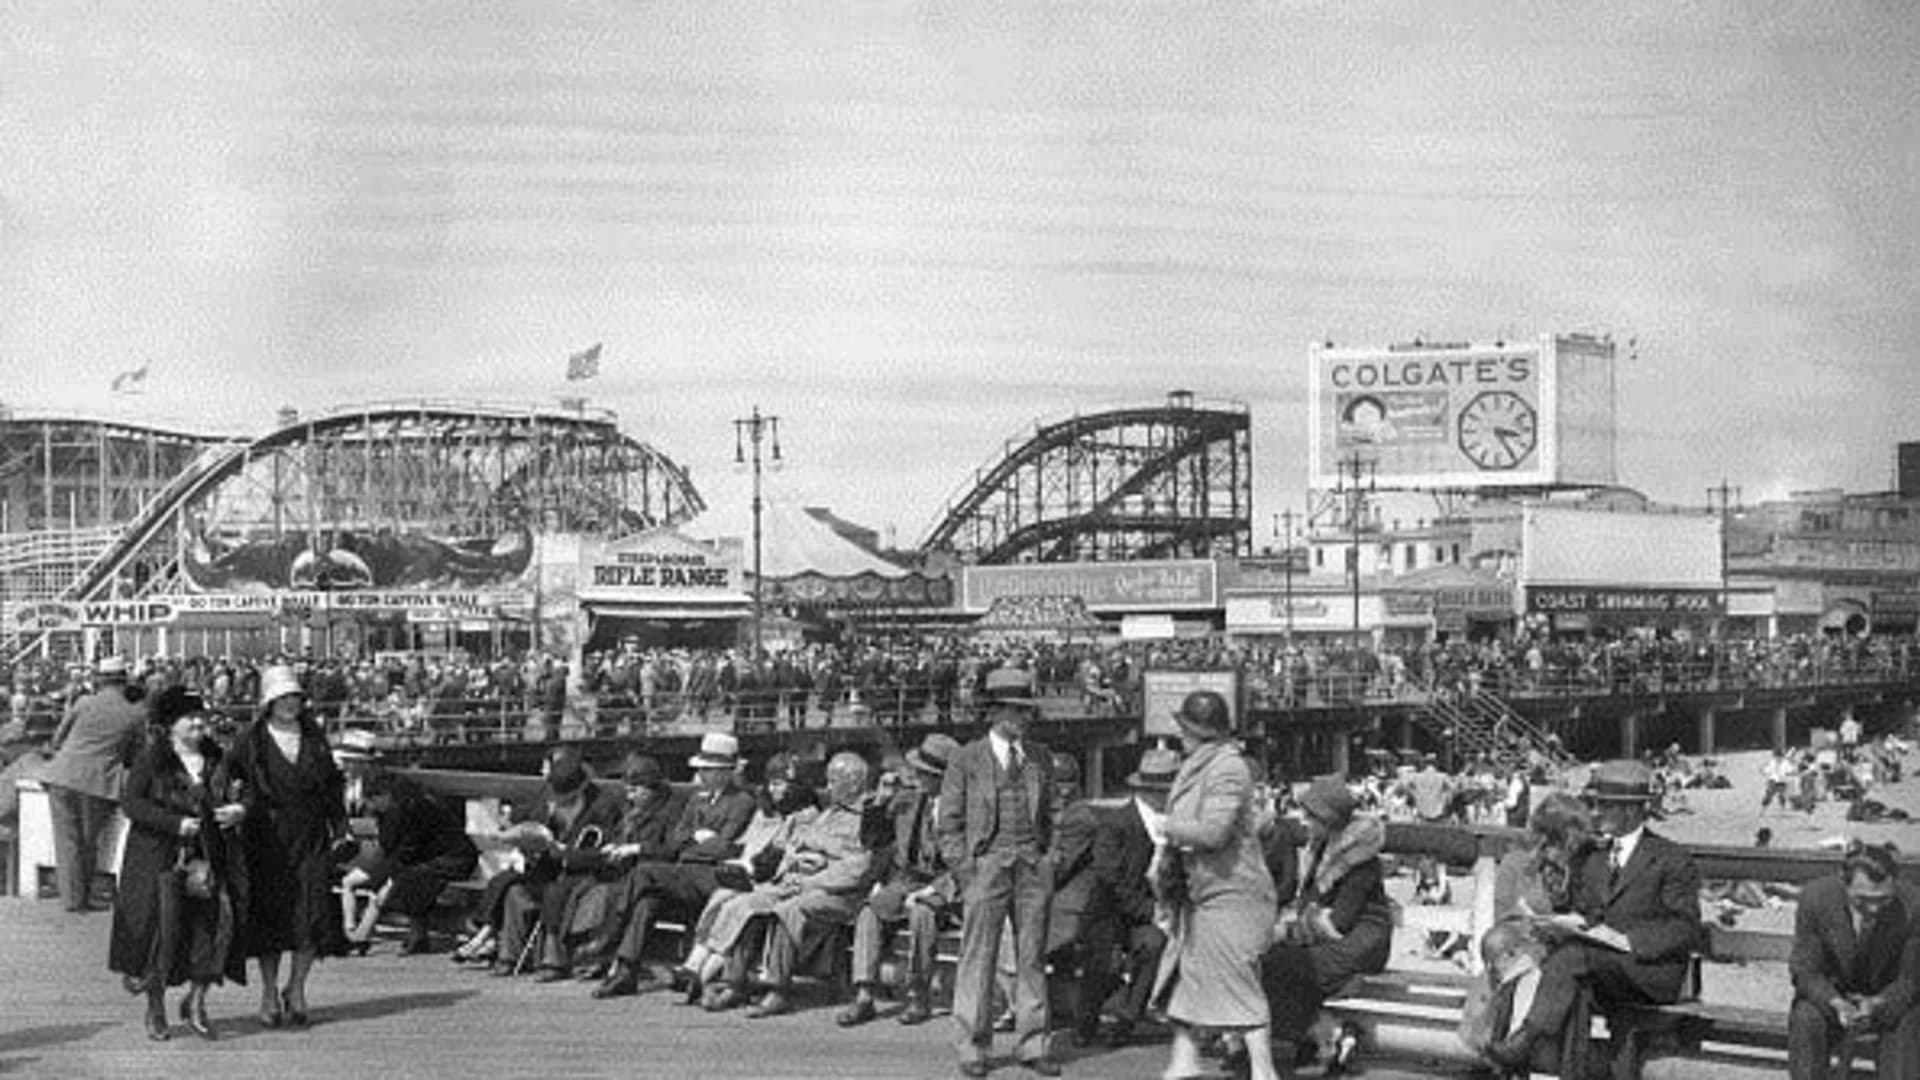 Historical photos of the Coney Island Boardwalk